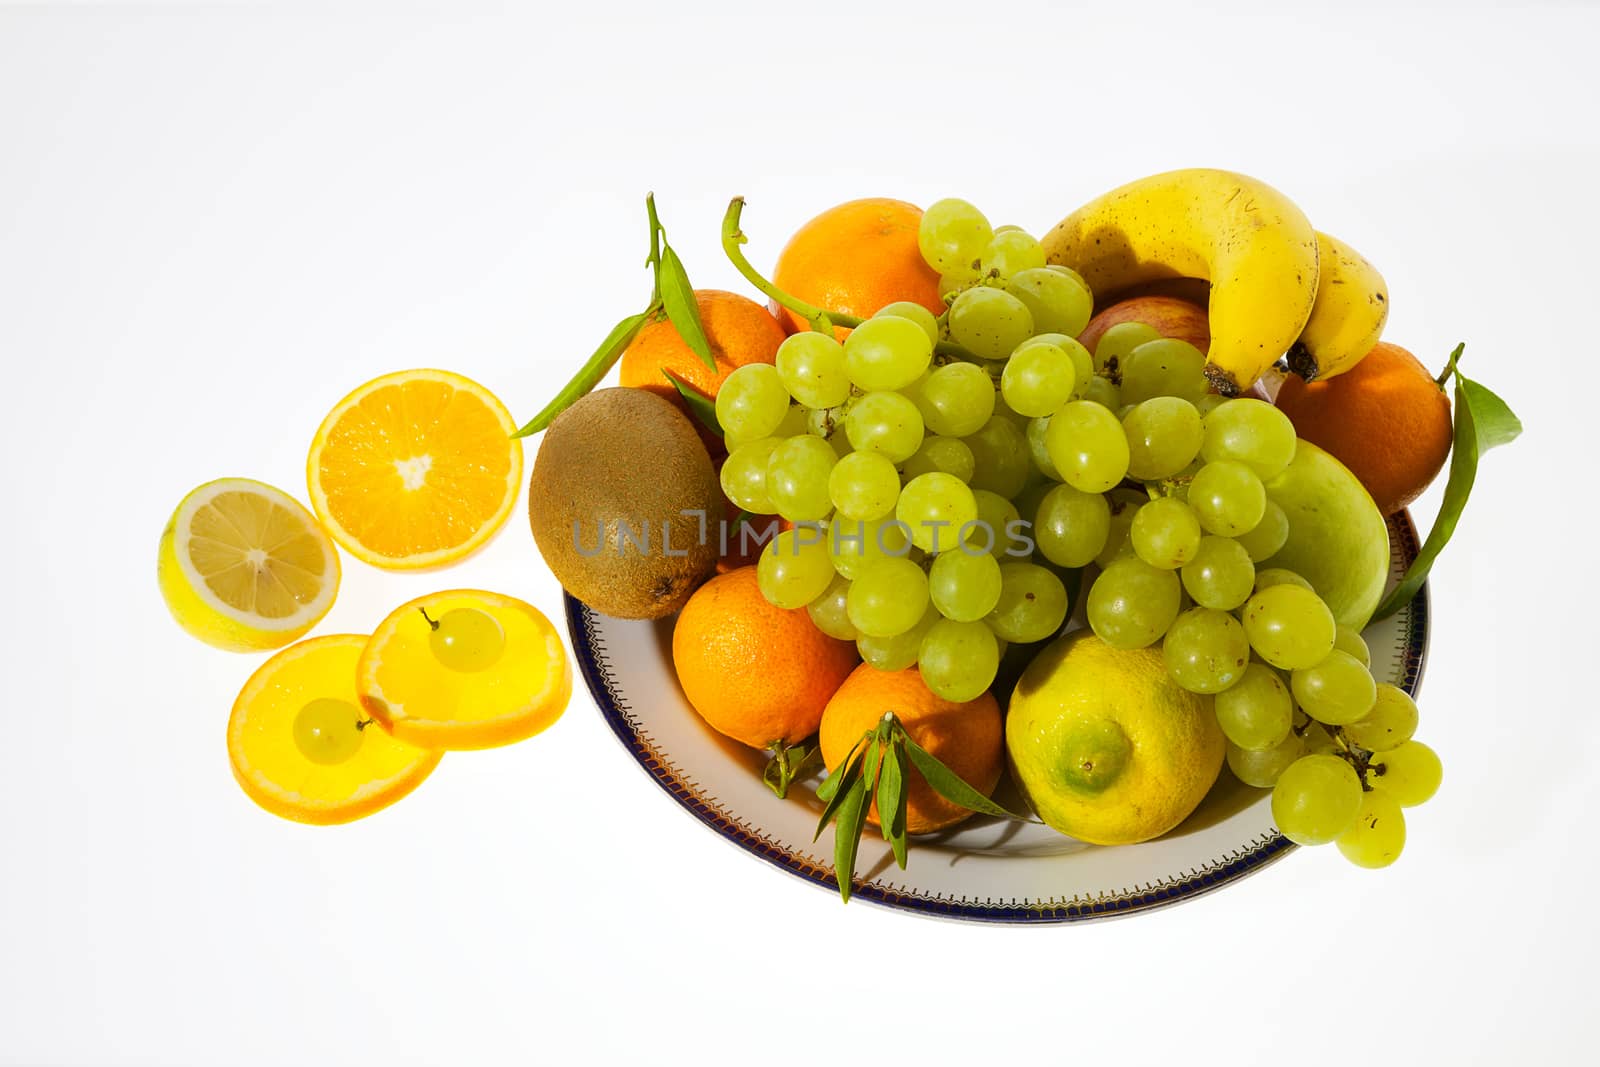 Fruits on plate by LuigiMorbidelli